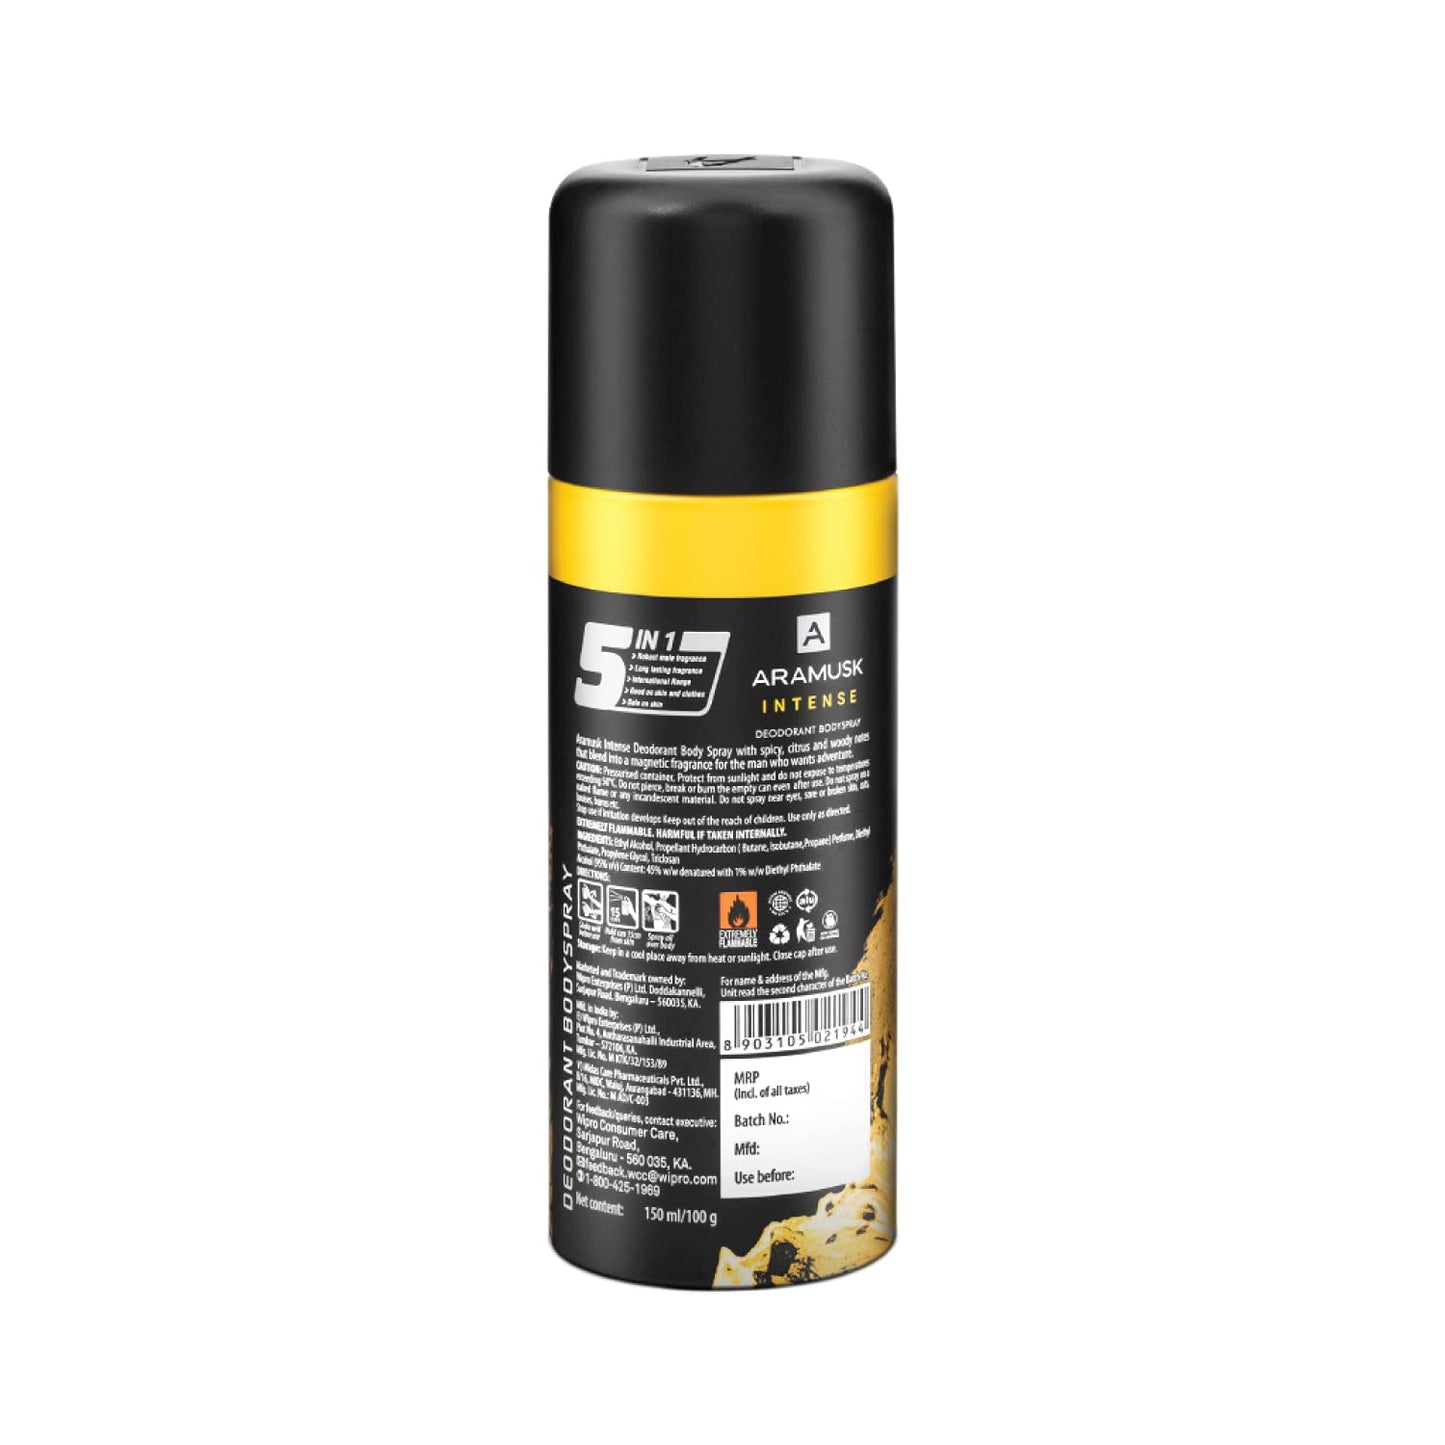 Aramusk Intense Deodorant Men Body Spray 150ml Pack Of 2